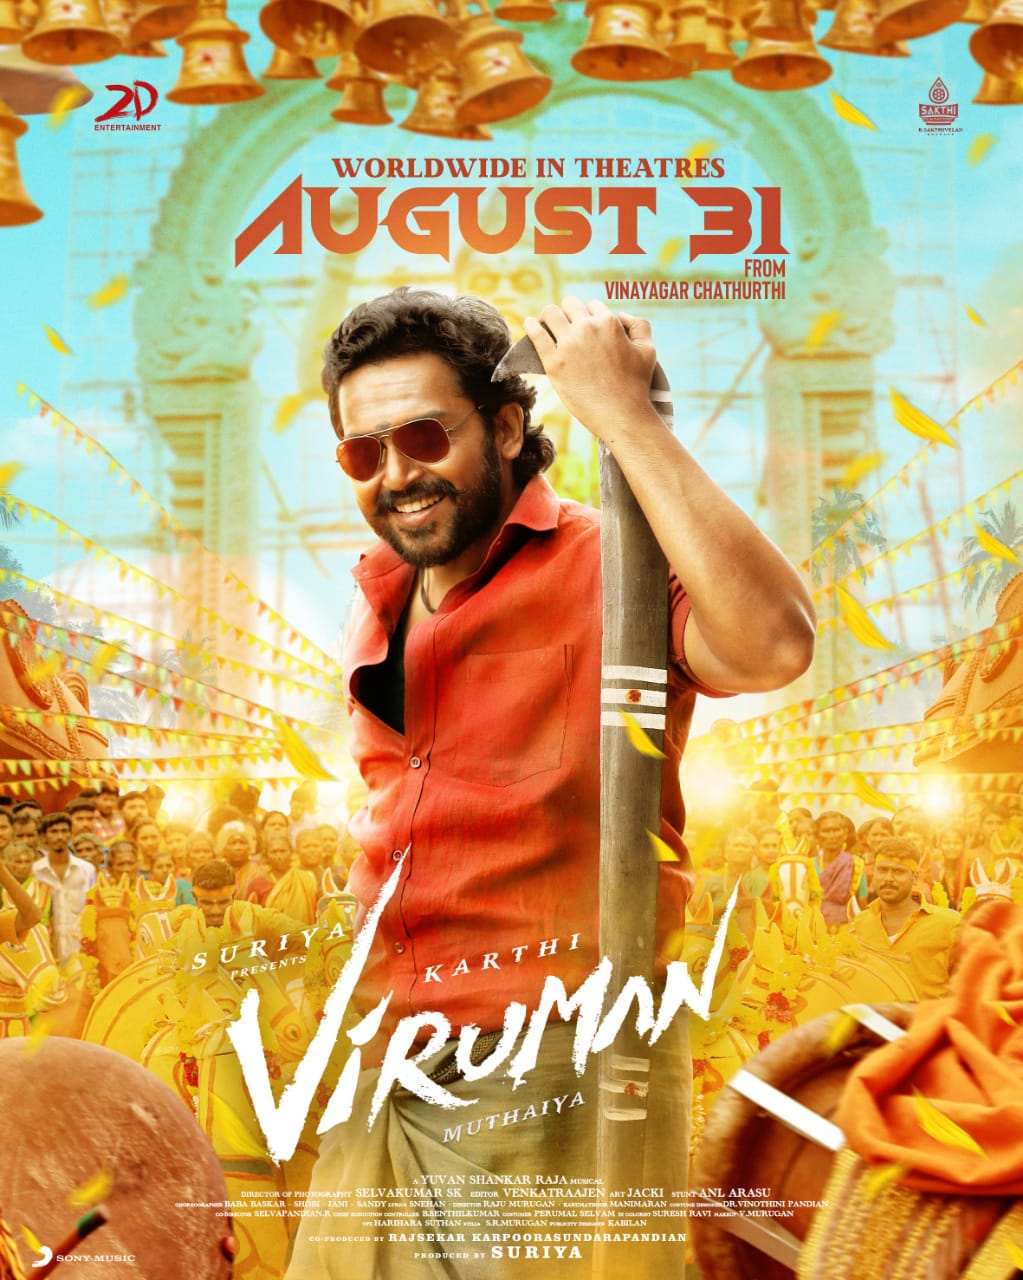 Karthi Starring Viruman Movie Release Update from 2D Suriya